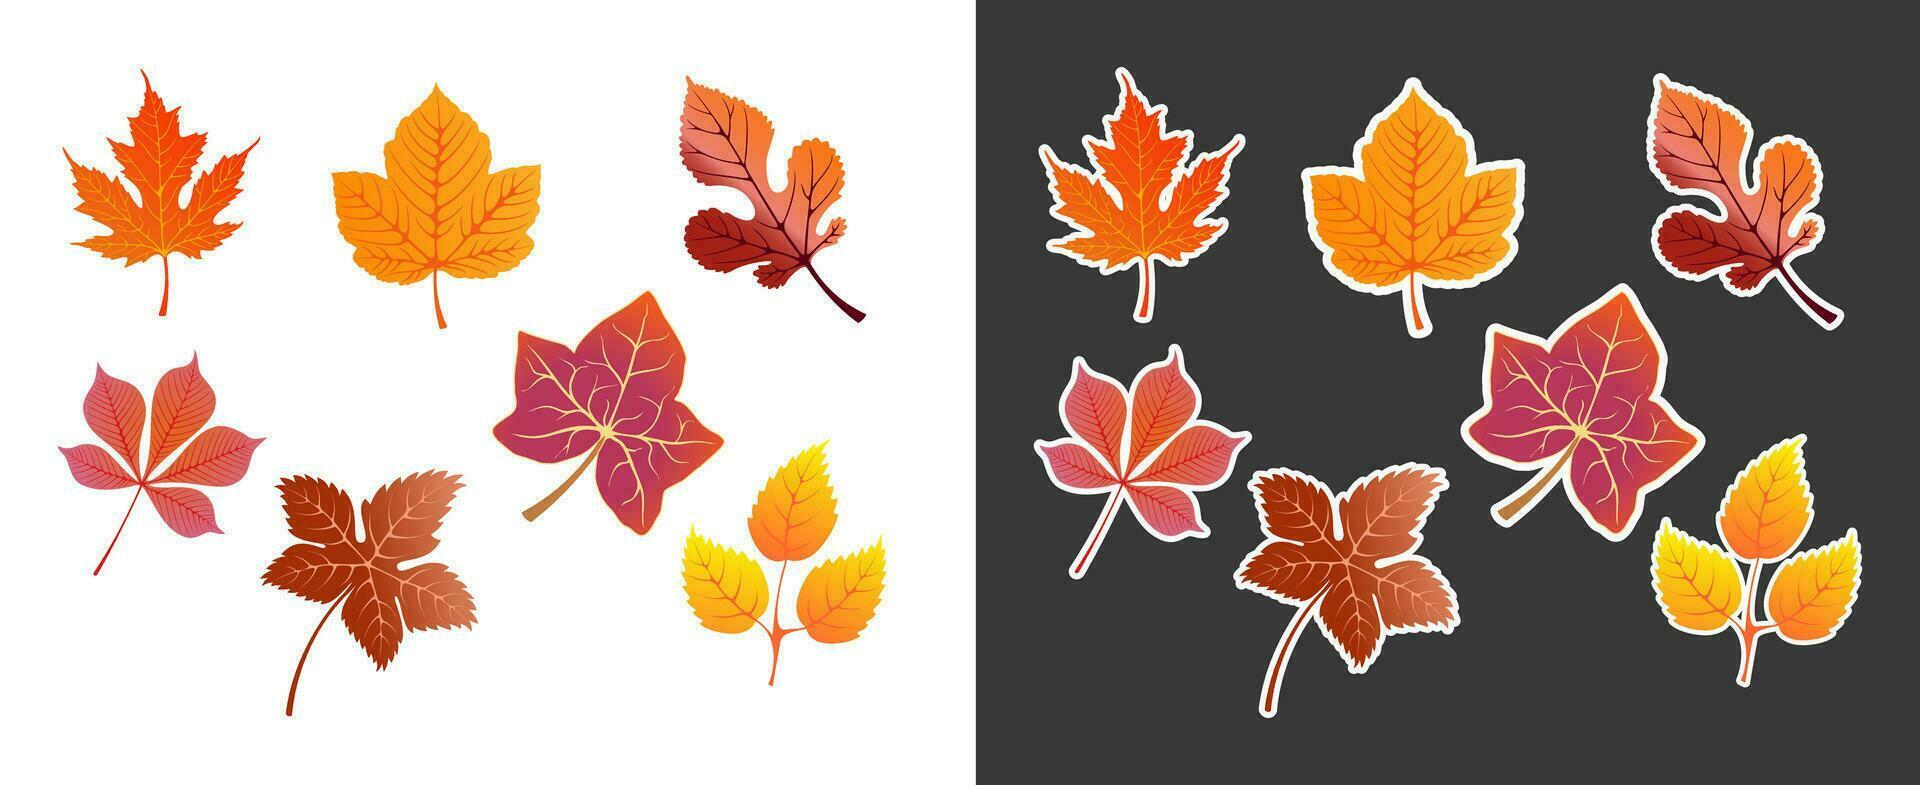 Autumn Maple Leaves Stickers Set Vector Illustration